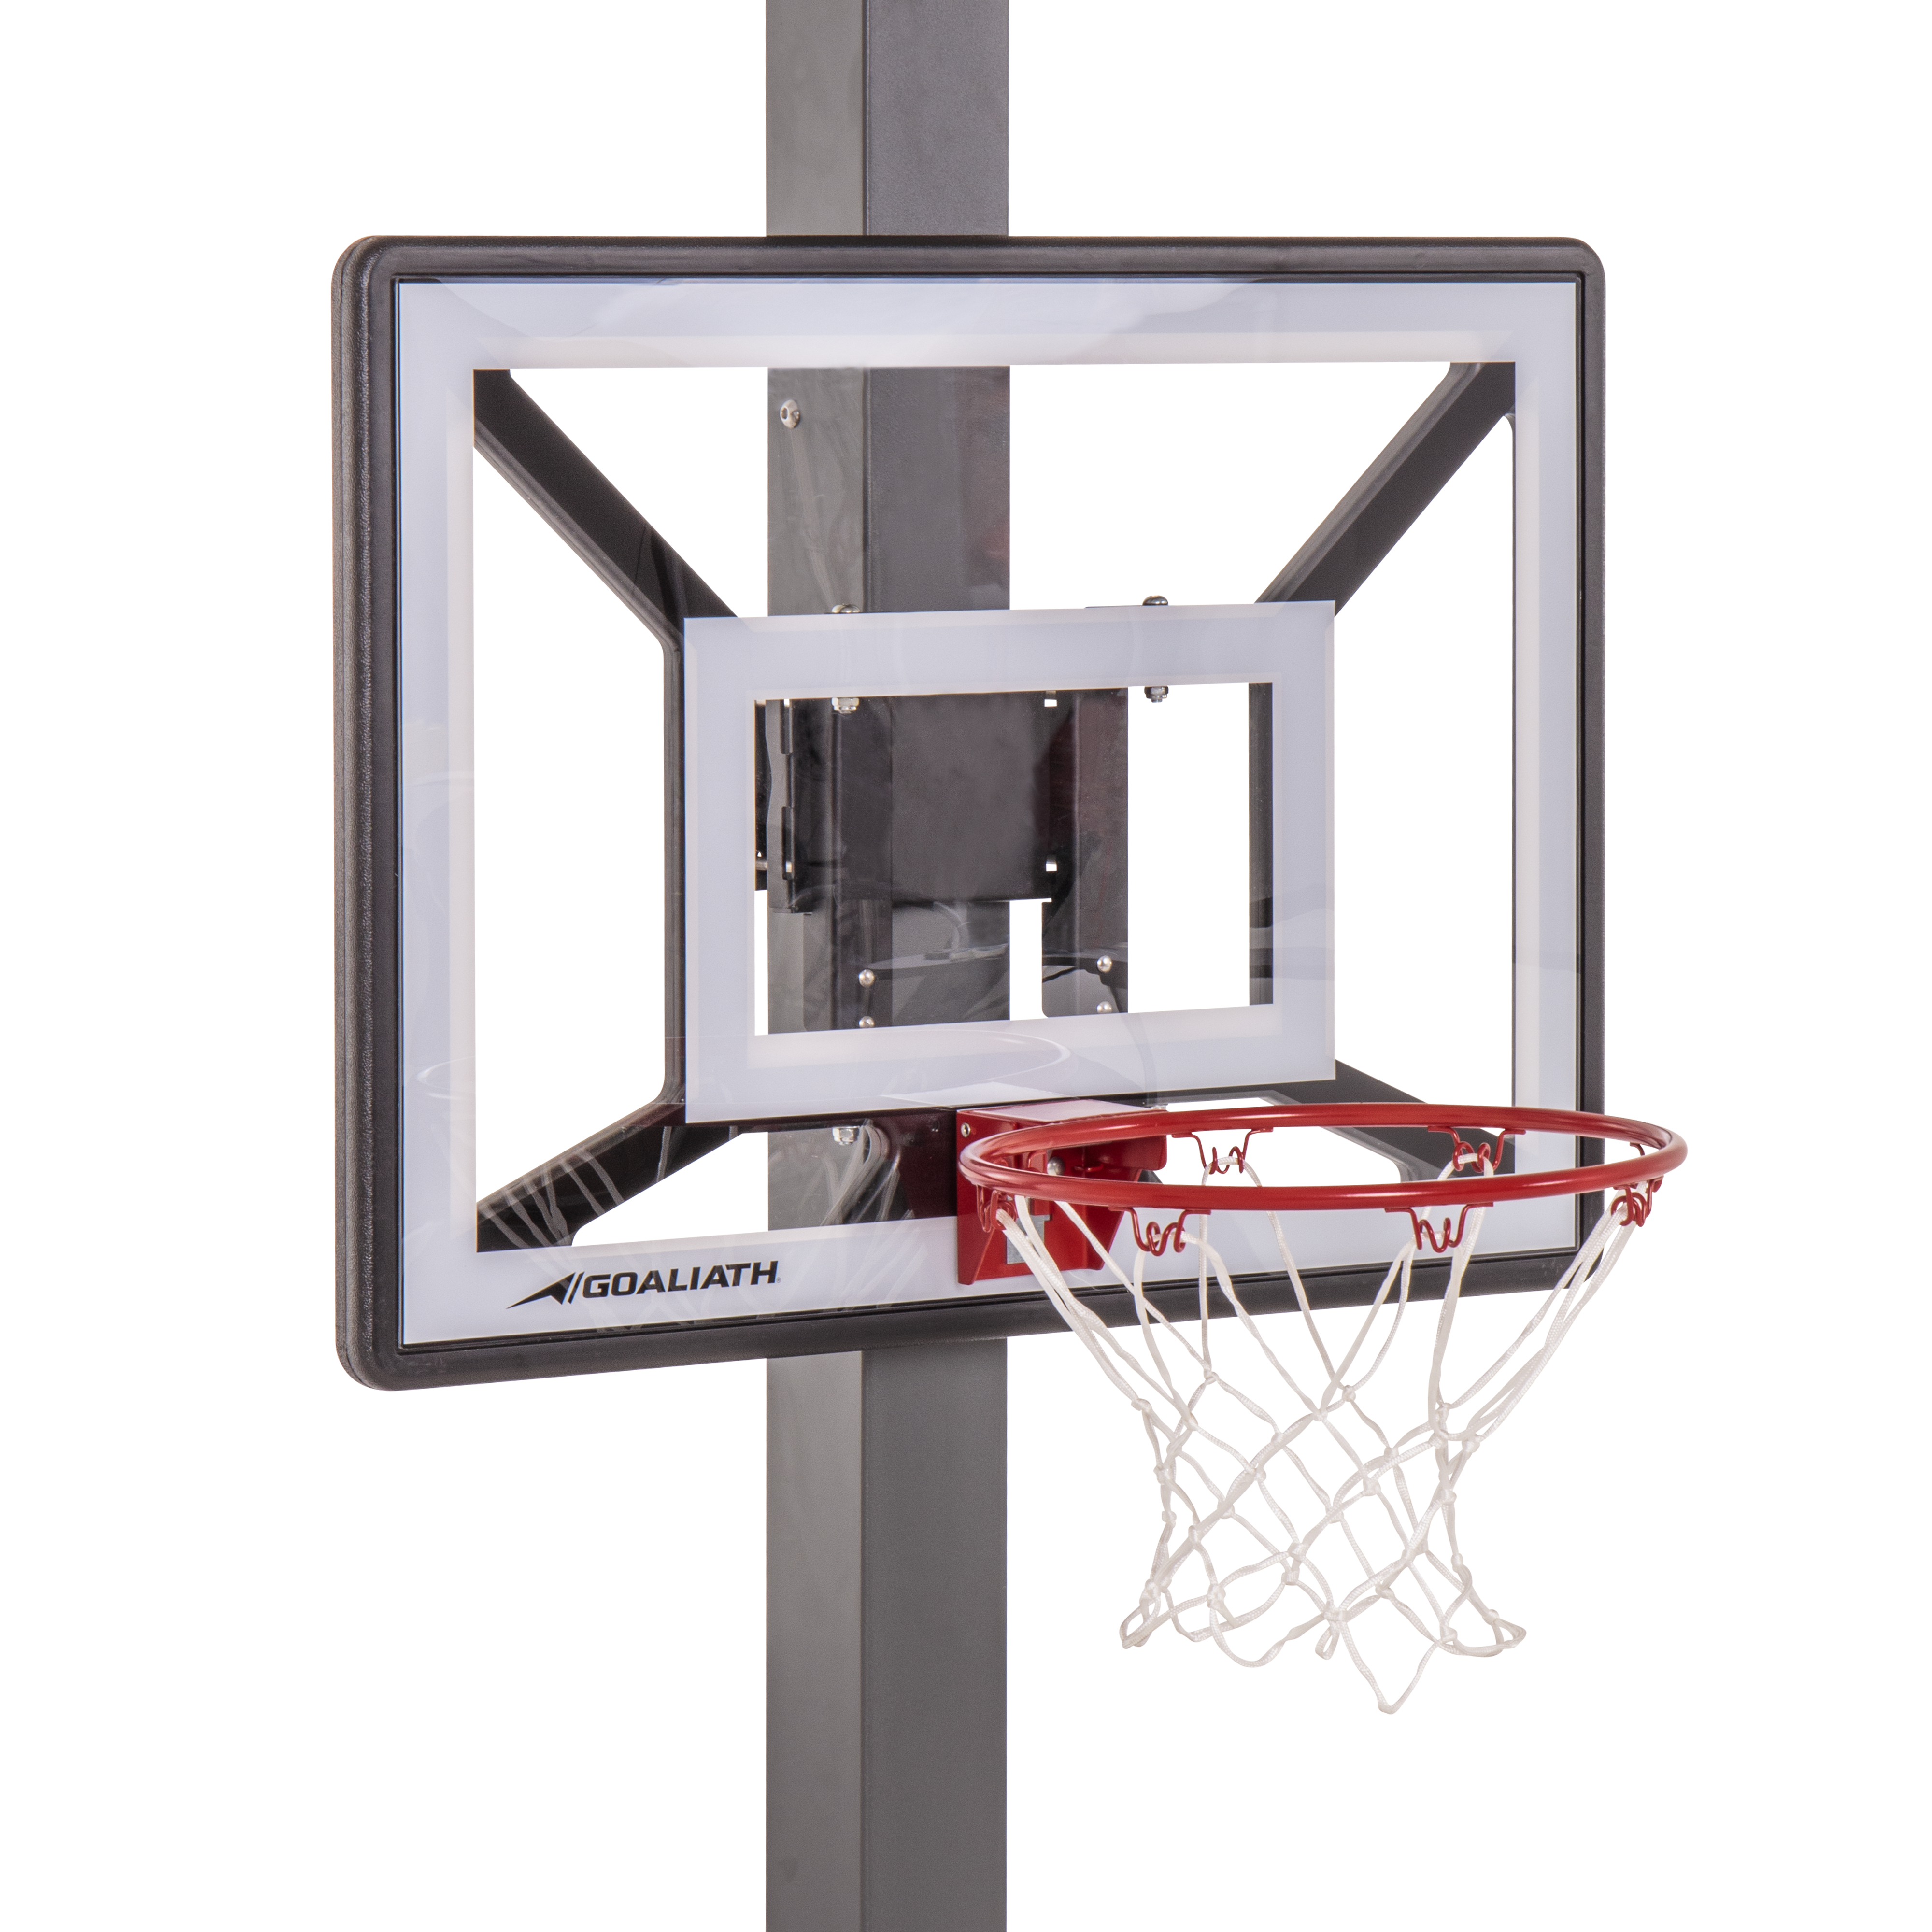 Gold Basketball Hoop – GimmeHoop